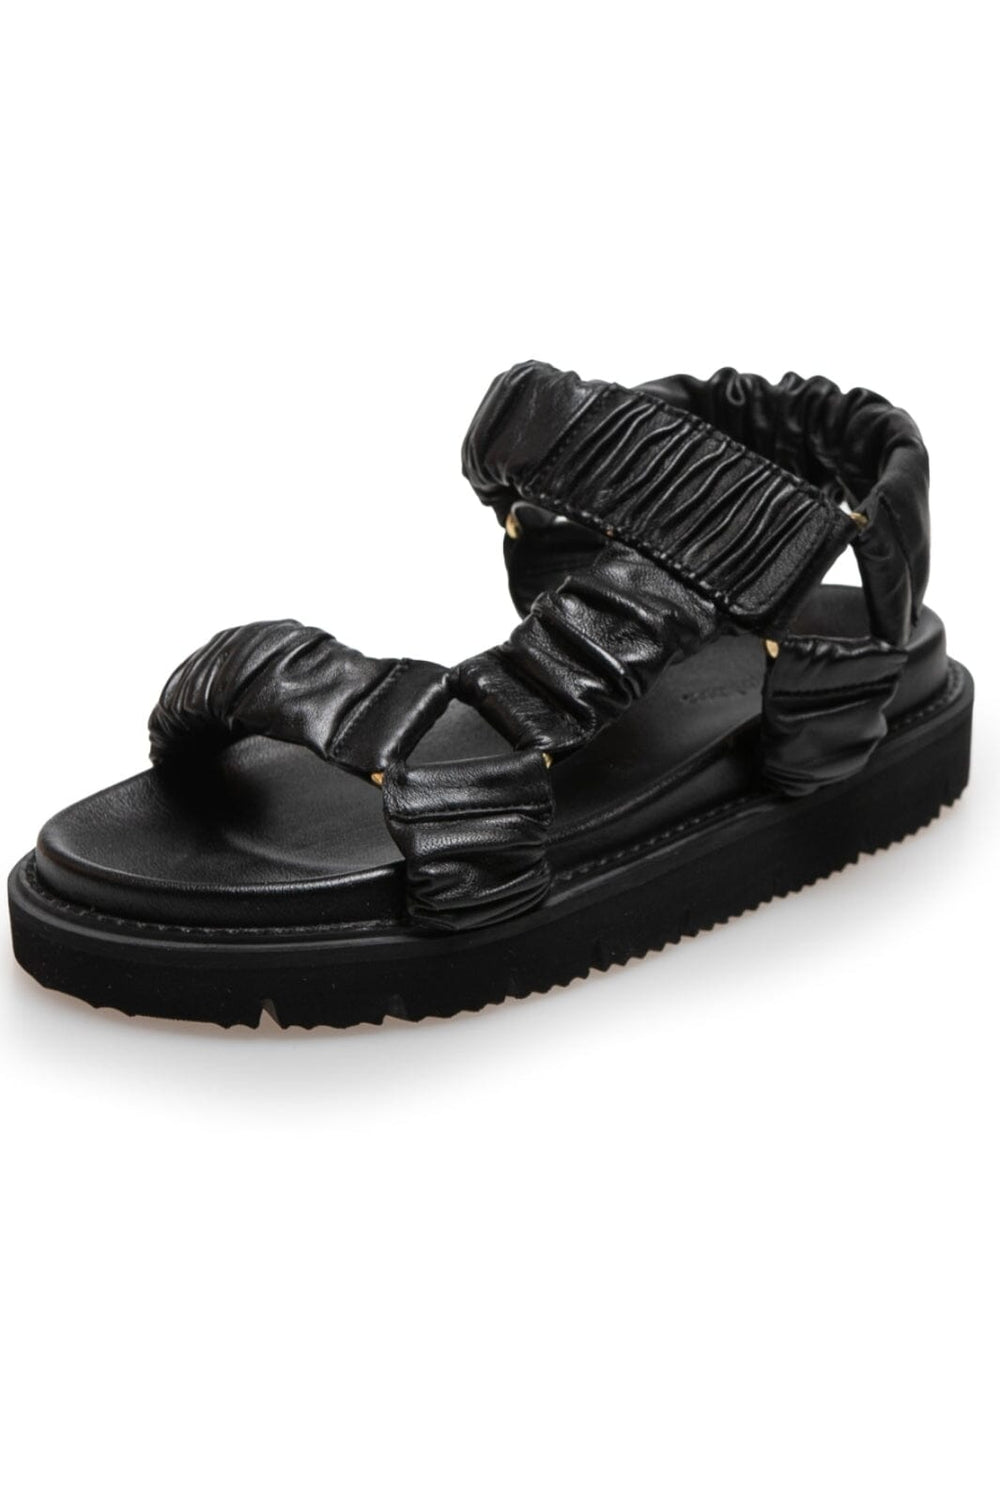 Copenhagen Shoes - Keep Walking - 0003 Black Sandaler 